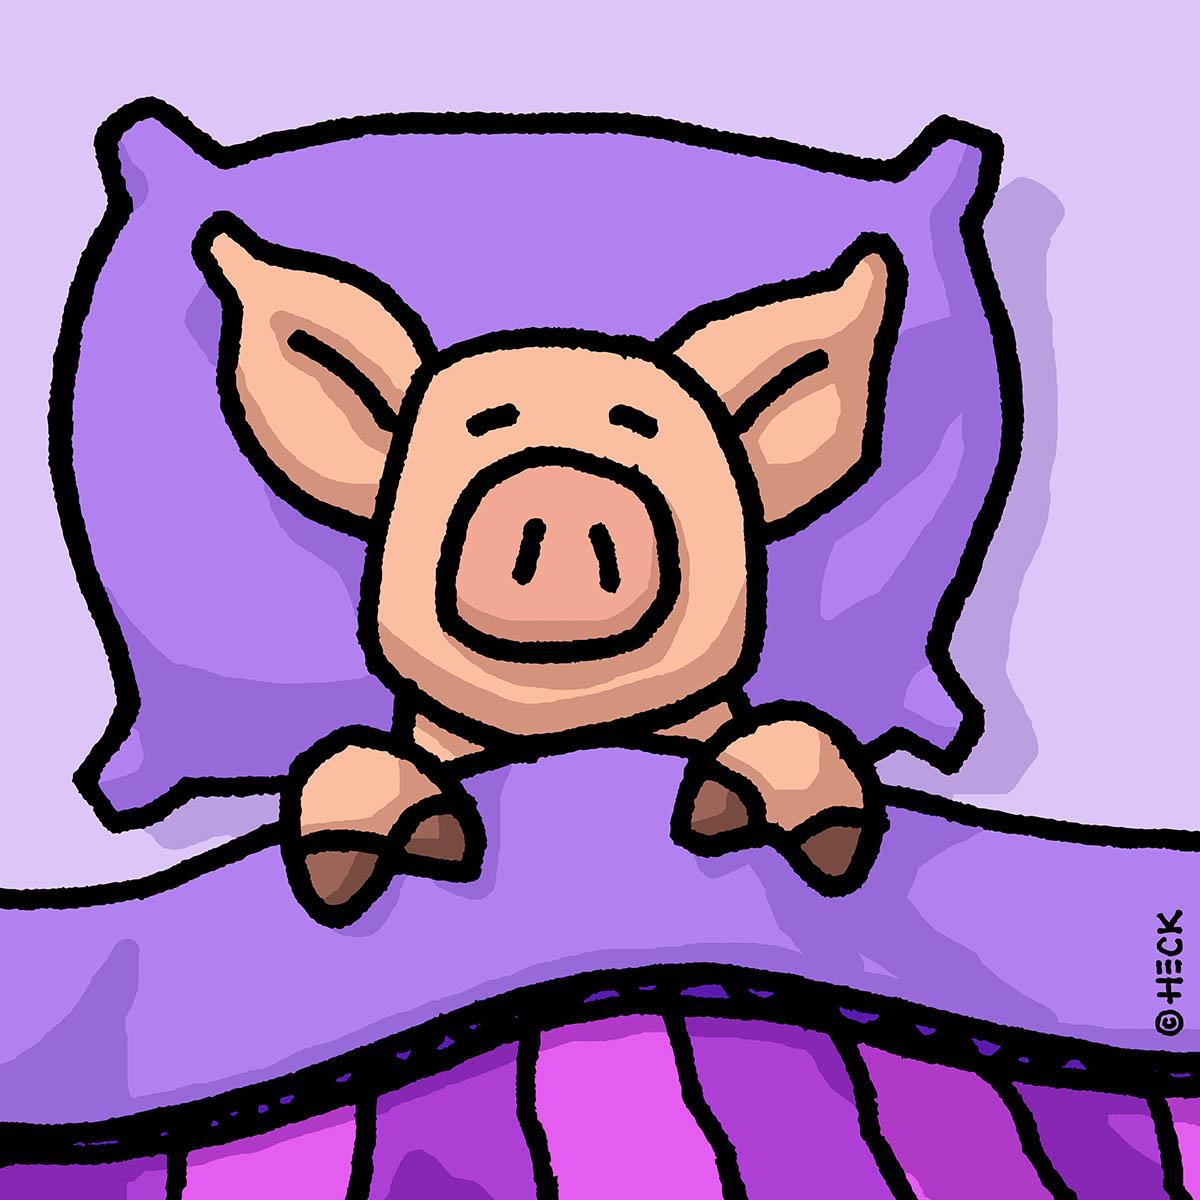 Pig in a Blanket